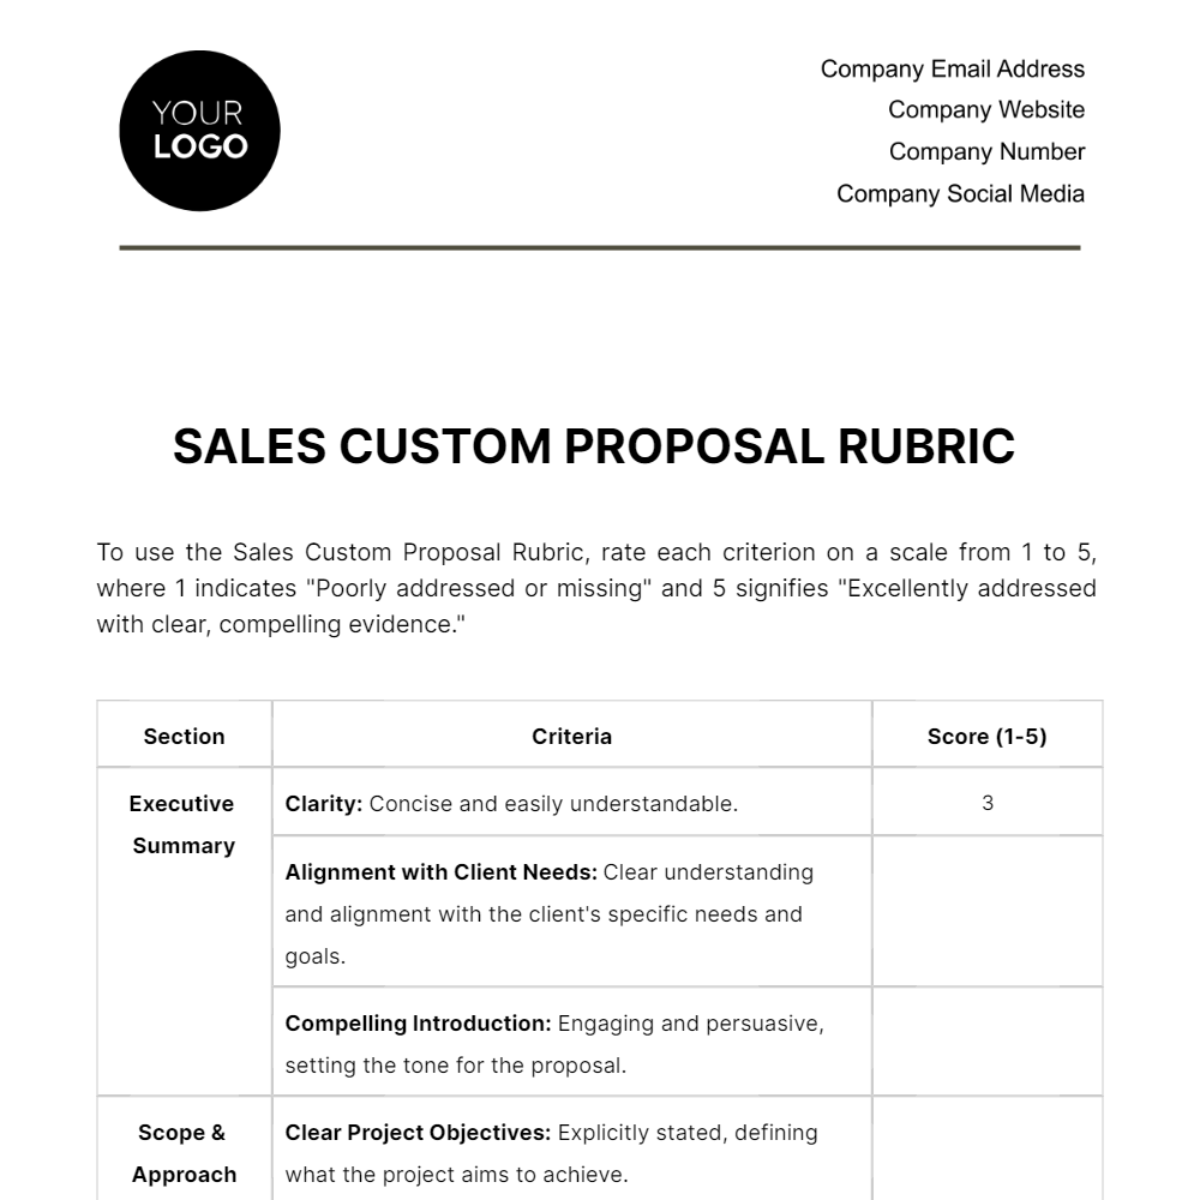 Free Sales Custom Proposal Rubric Template